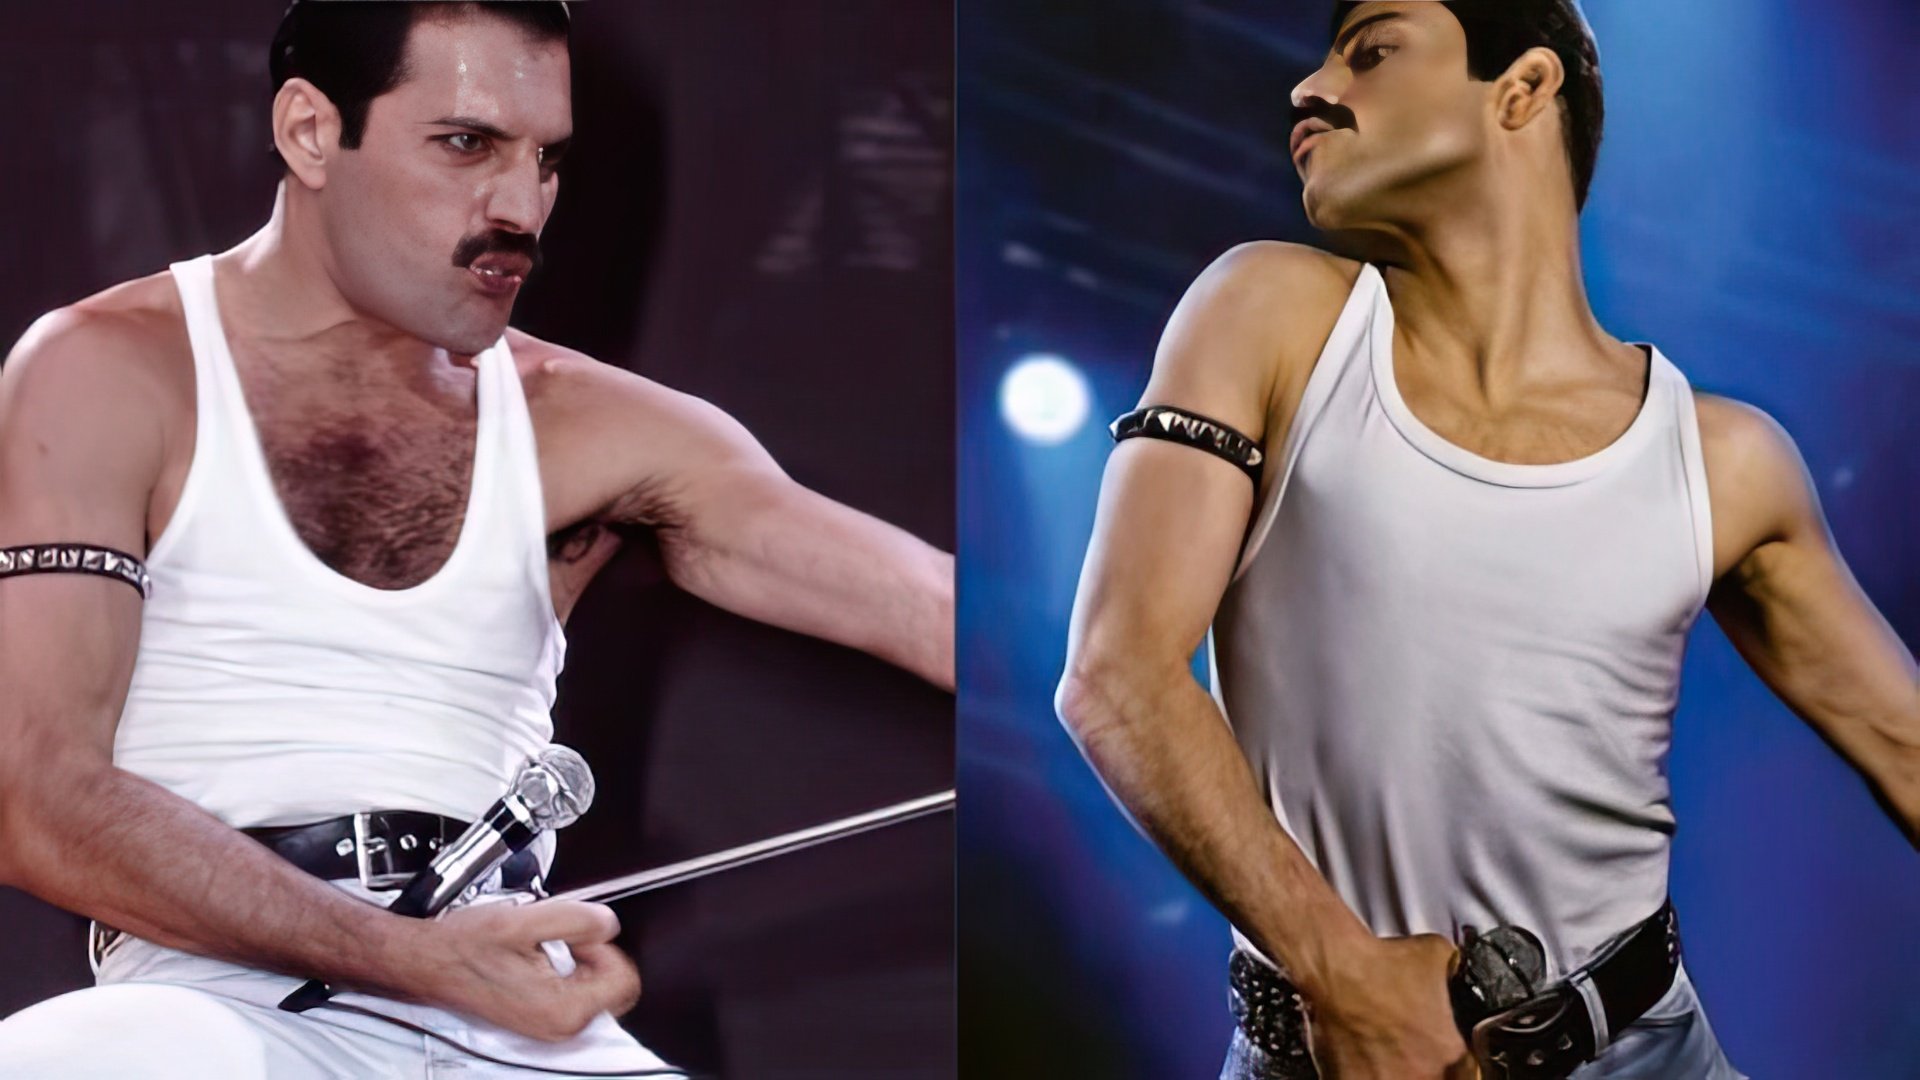 On the left: Freddie Mercury, on the right: Rami Malek